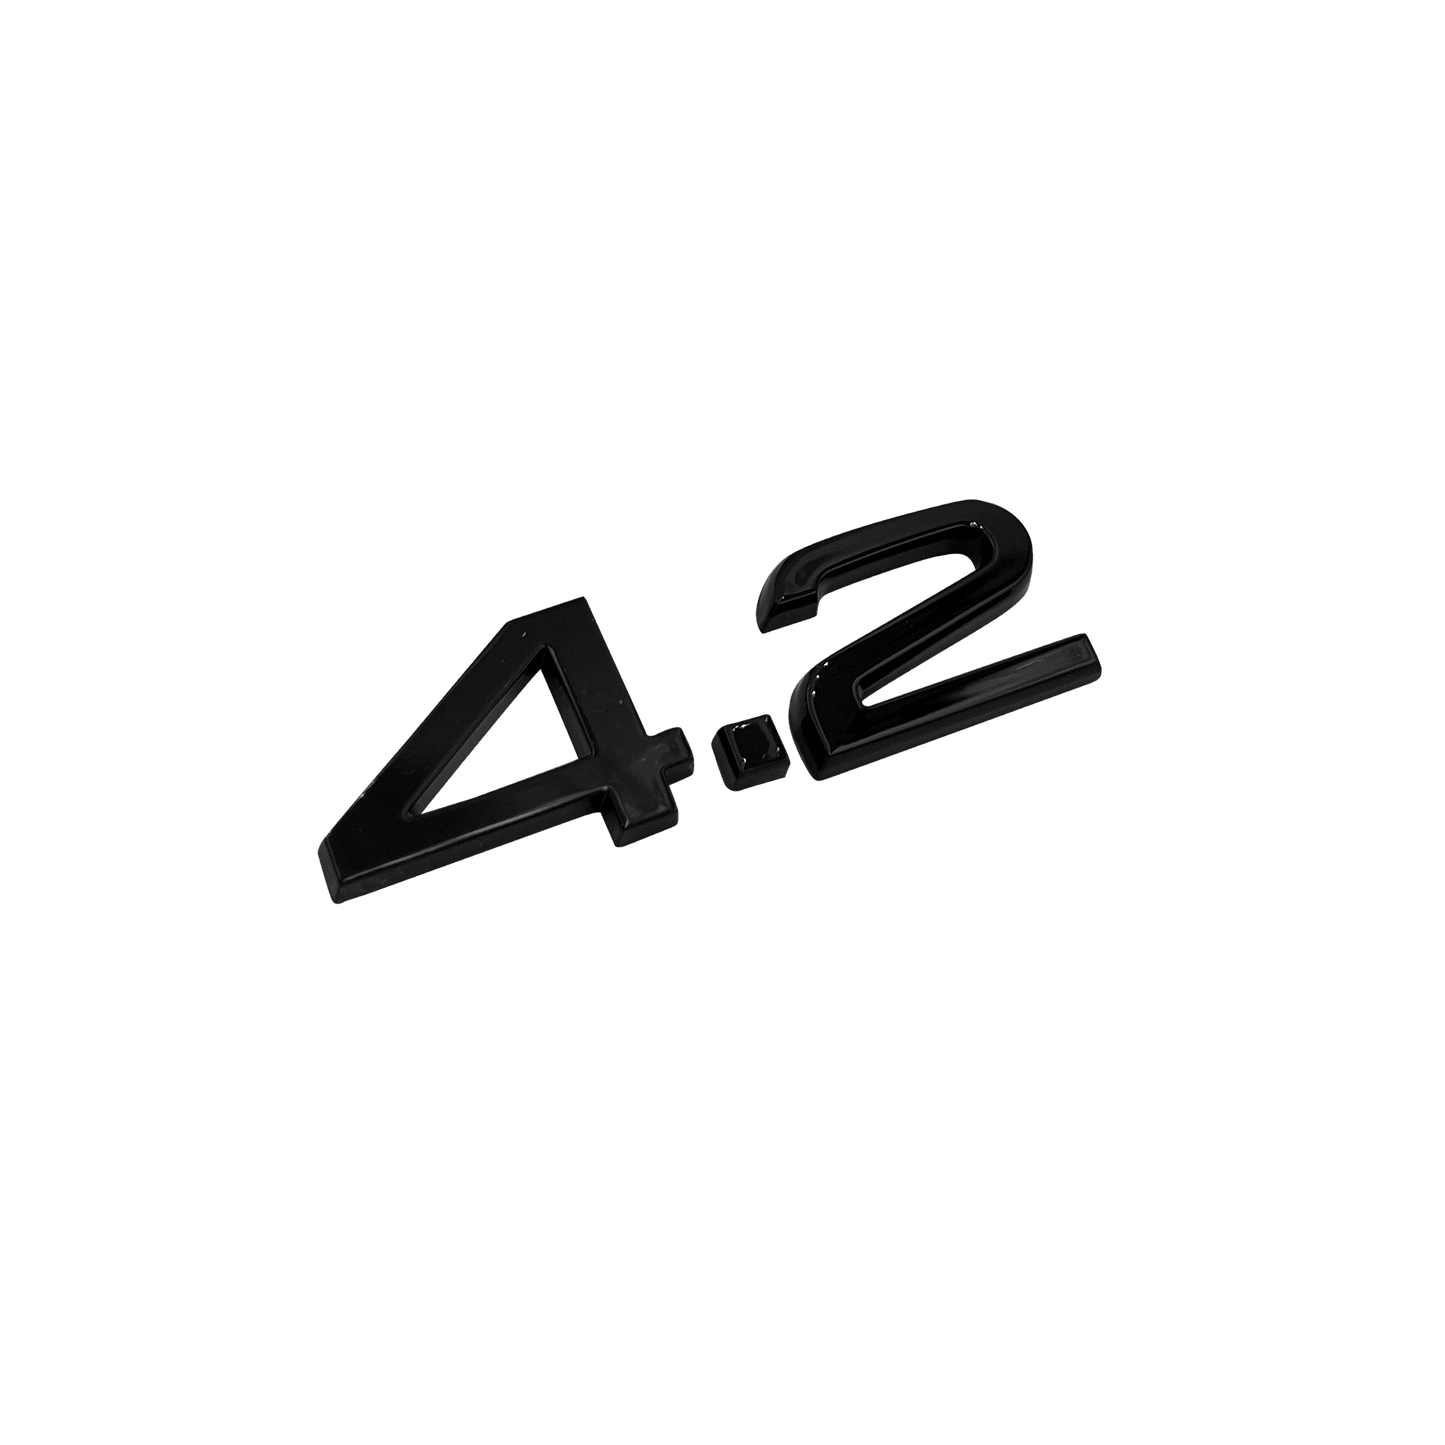 Audi "4.2" svart bakre emblem